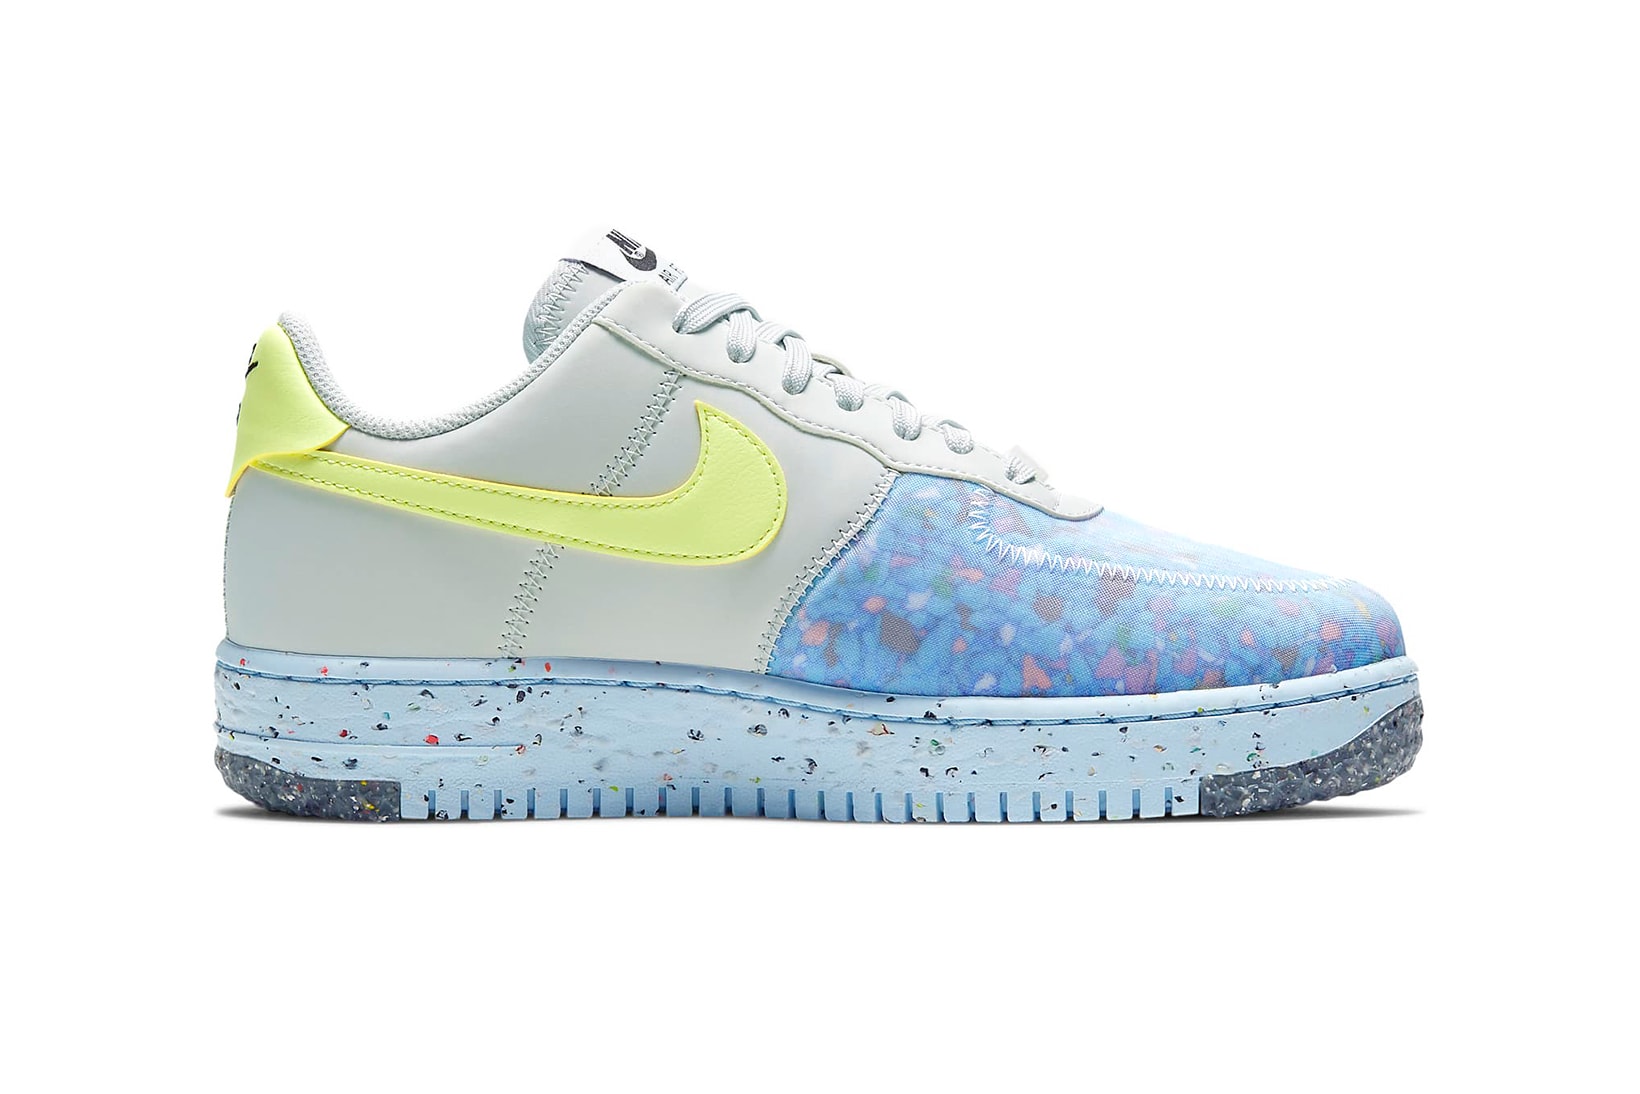 nike air force 1 crater womens sneakers neon green pastel blue gray colorway shoes footwear sneakerhead